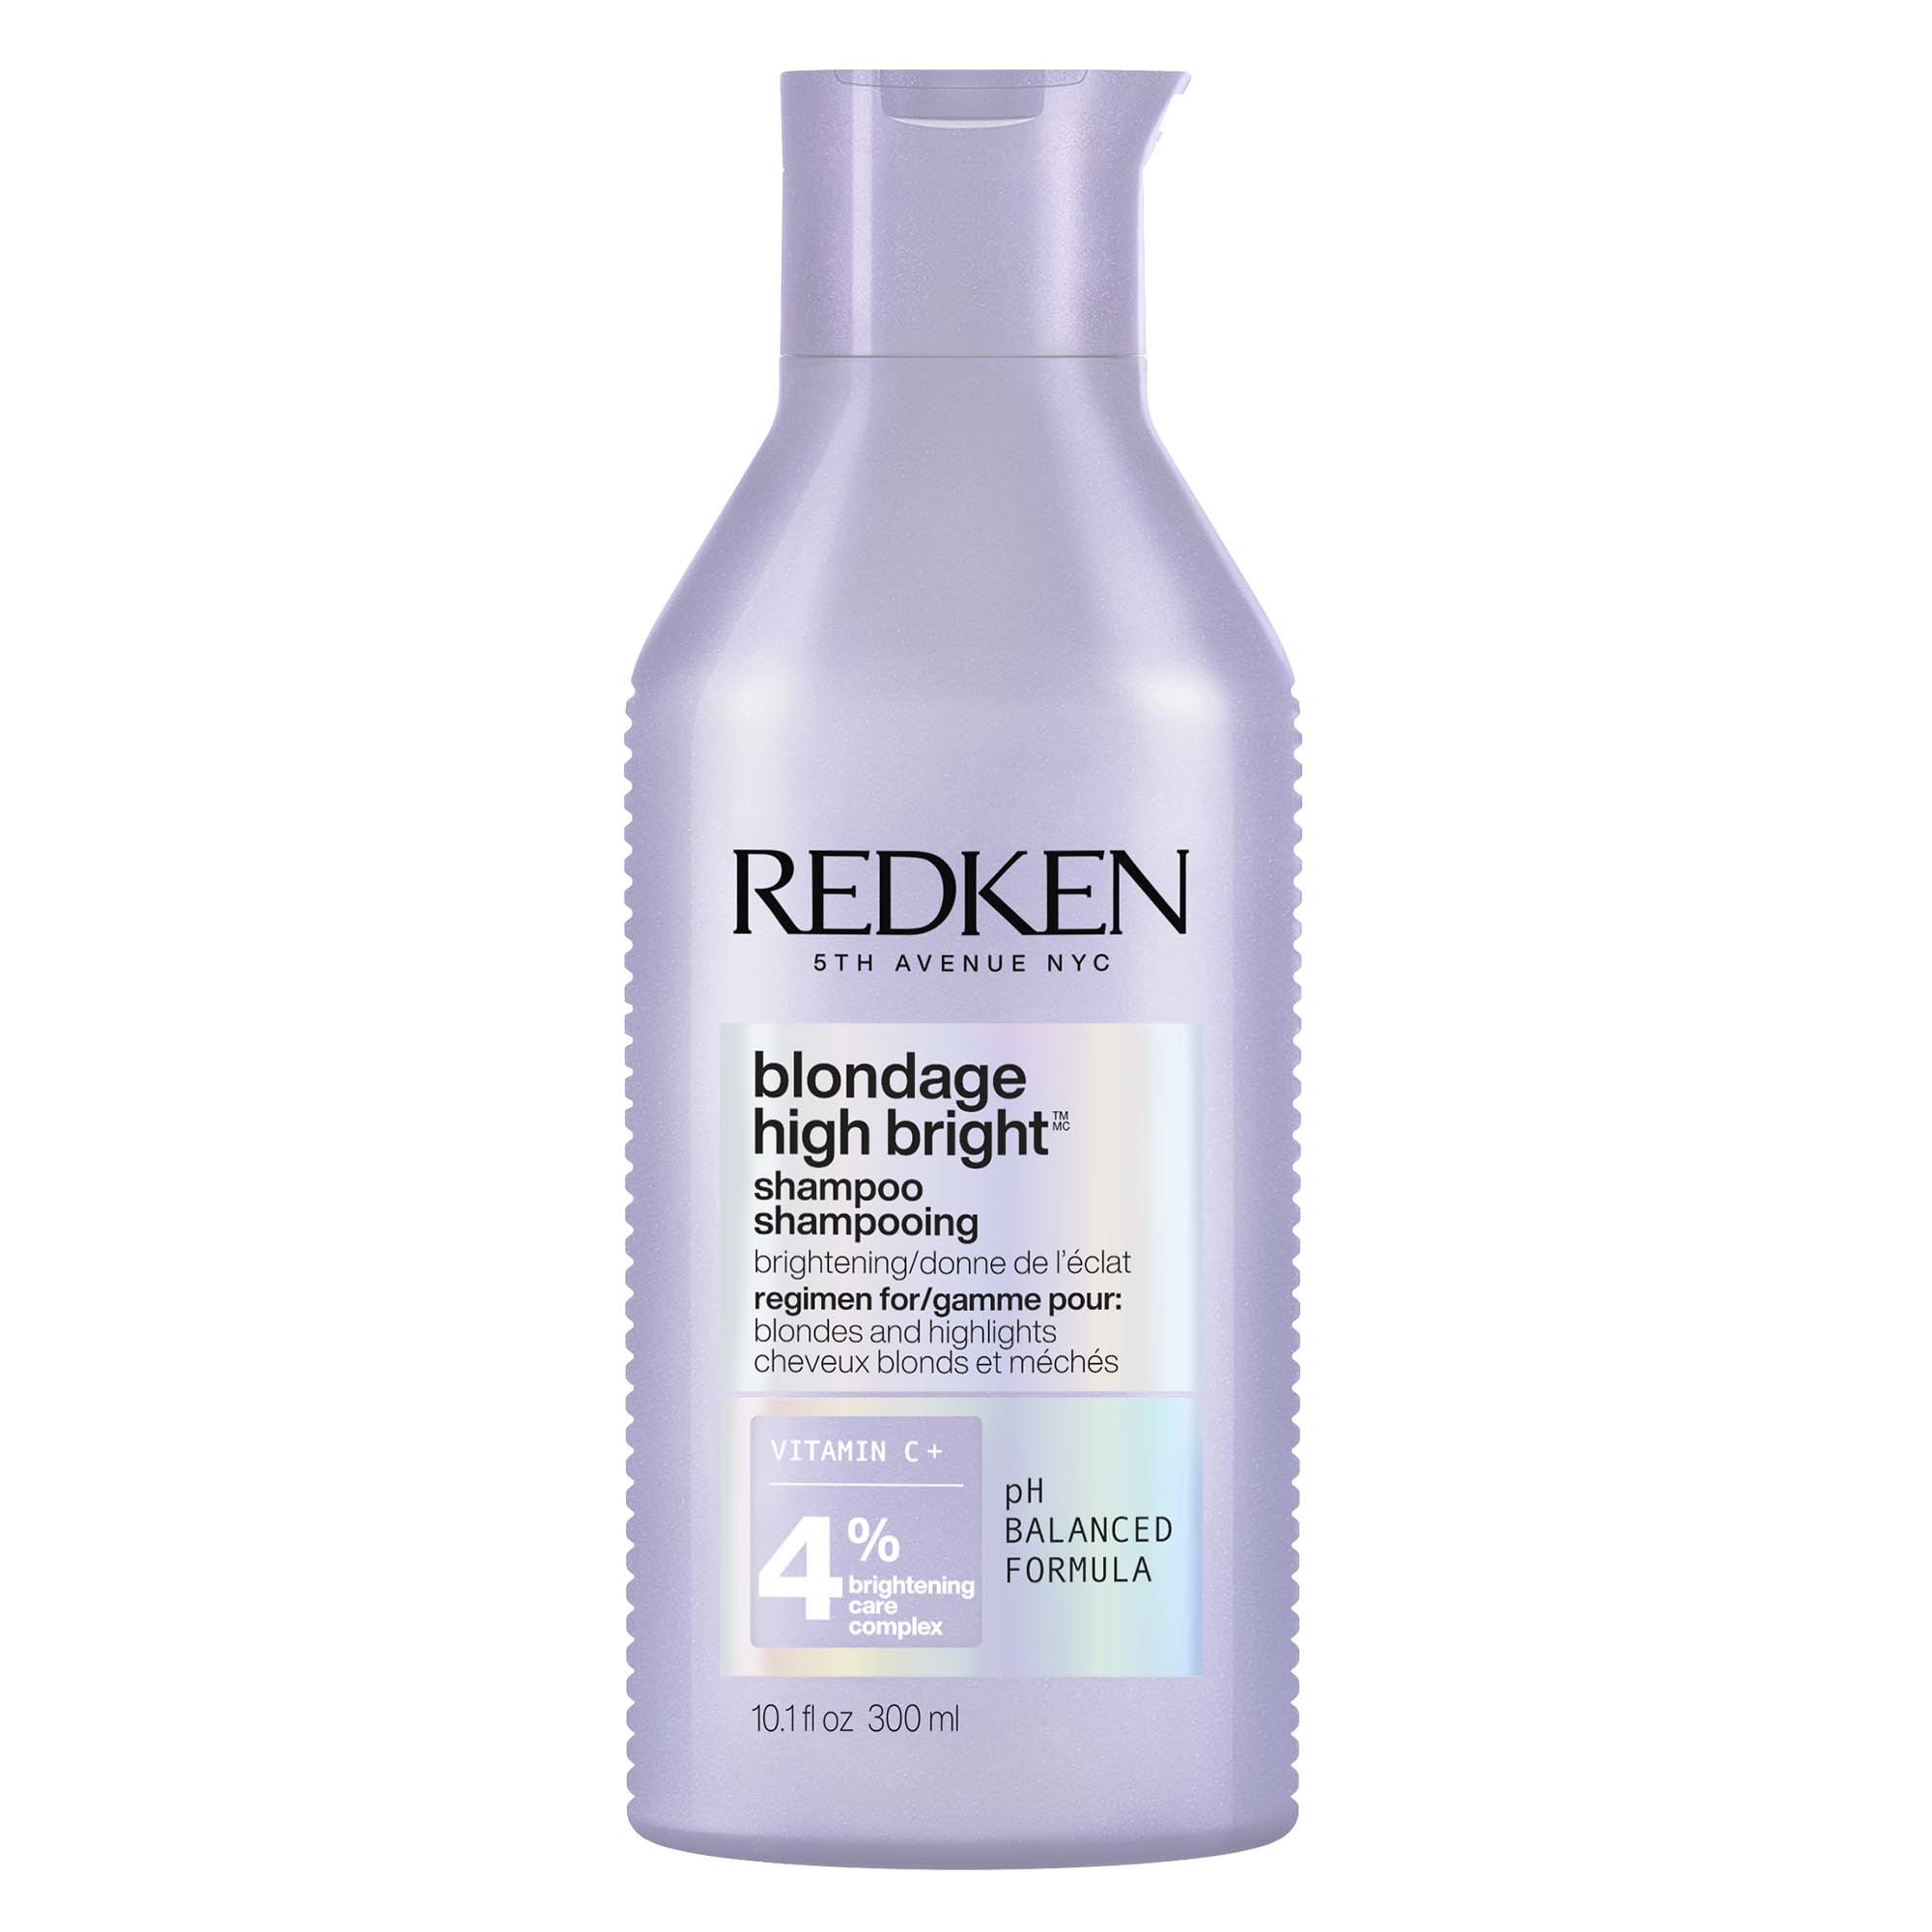 Redken – Blondage High Bright – Shampoo (300ml)